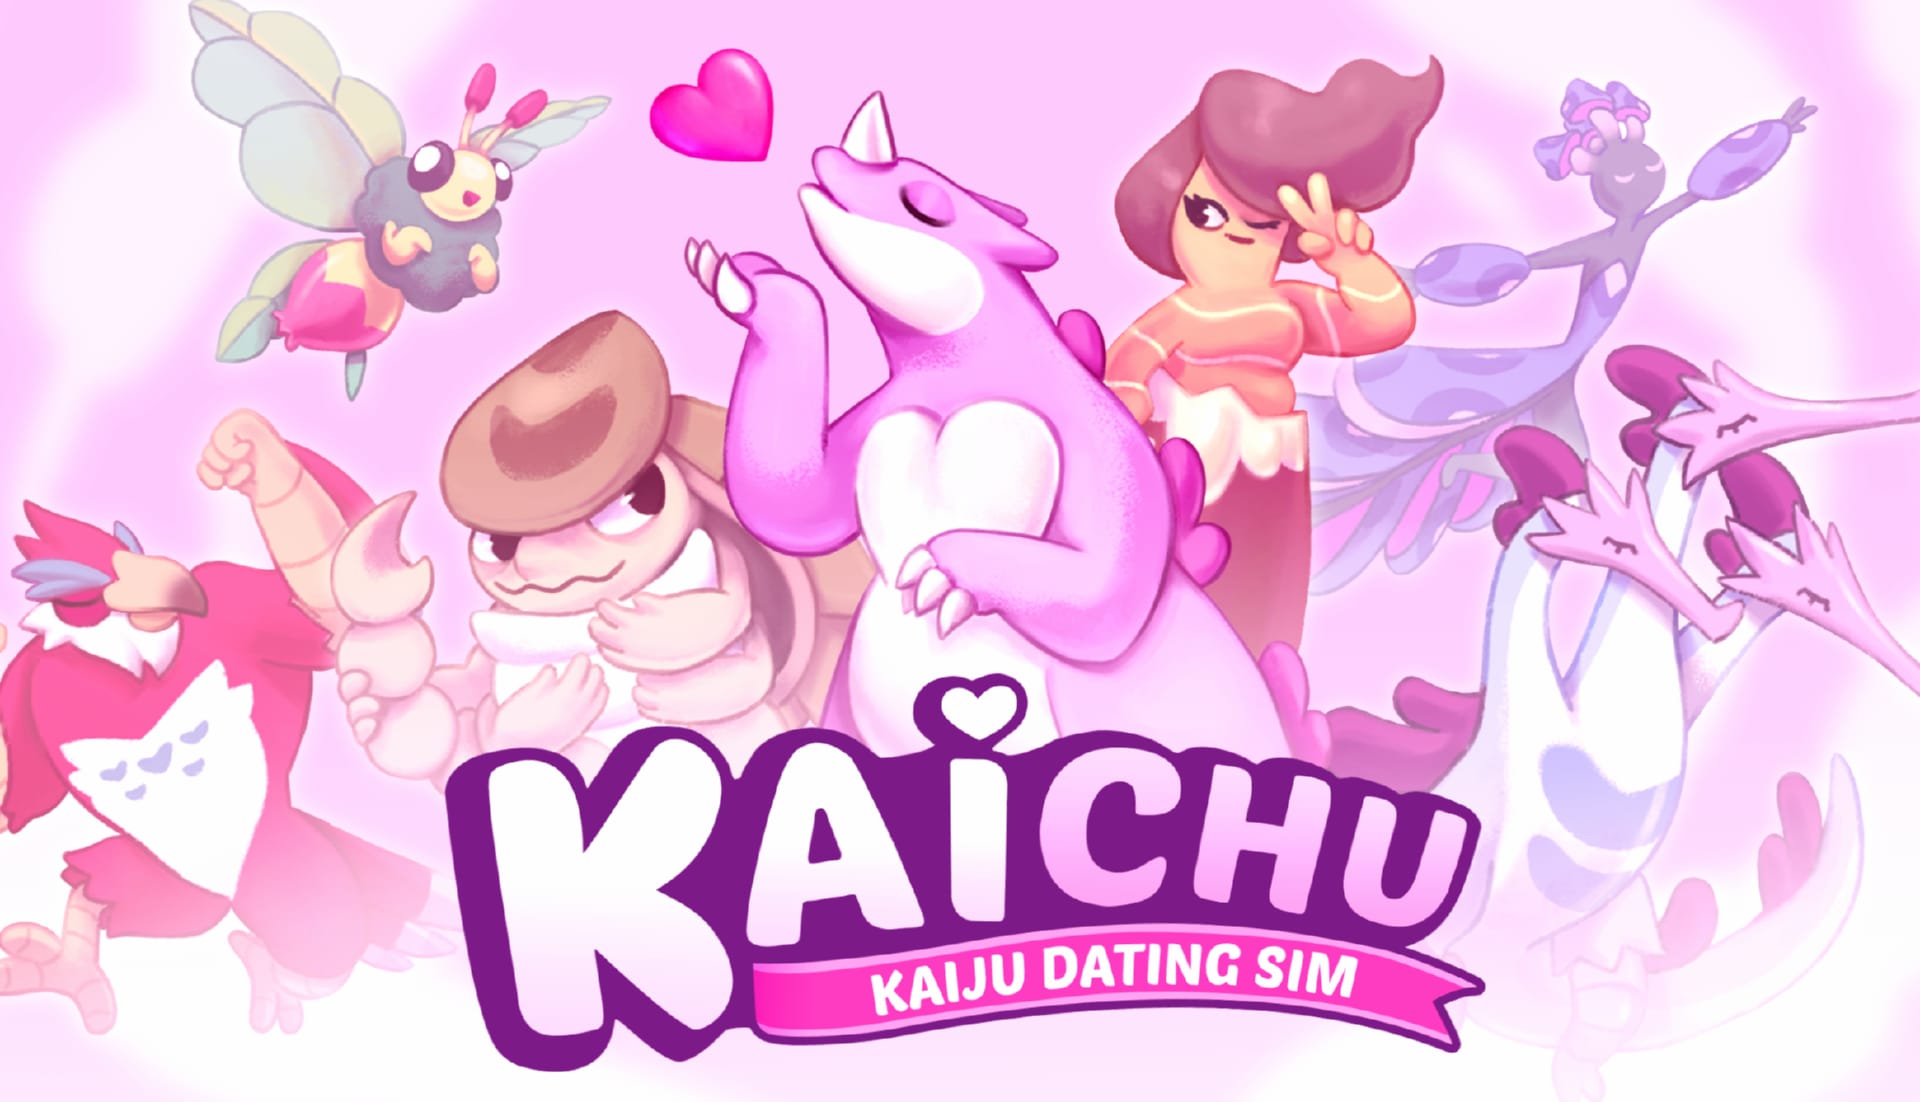 Kaichu - The Kaiju Dating Sim at 1600 x 1200 size wallpapers HD quality